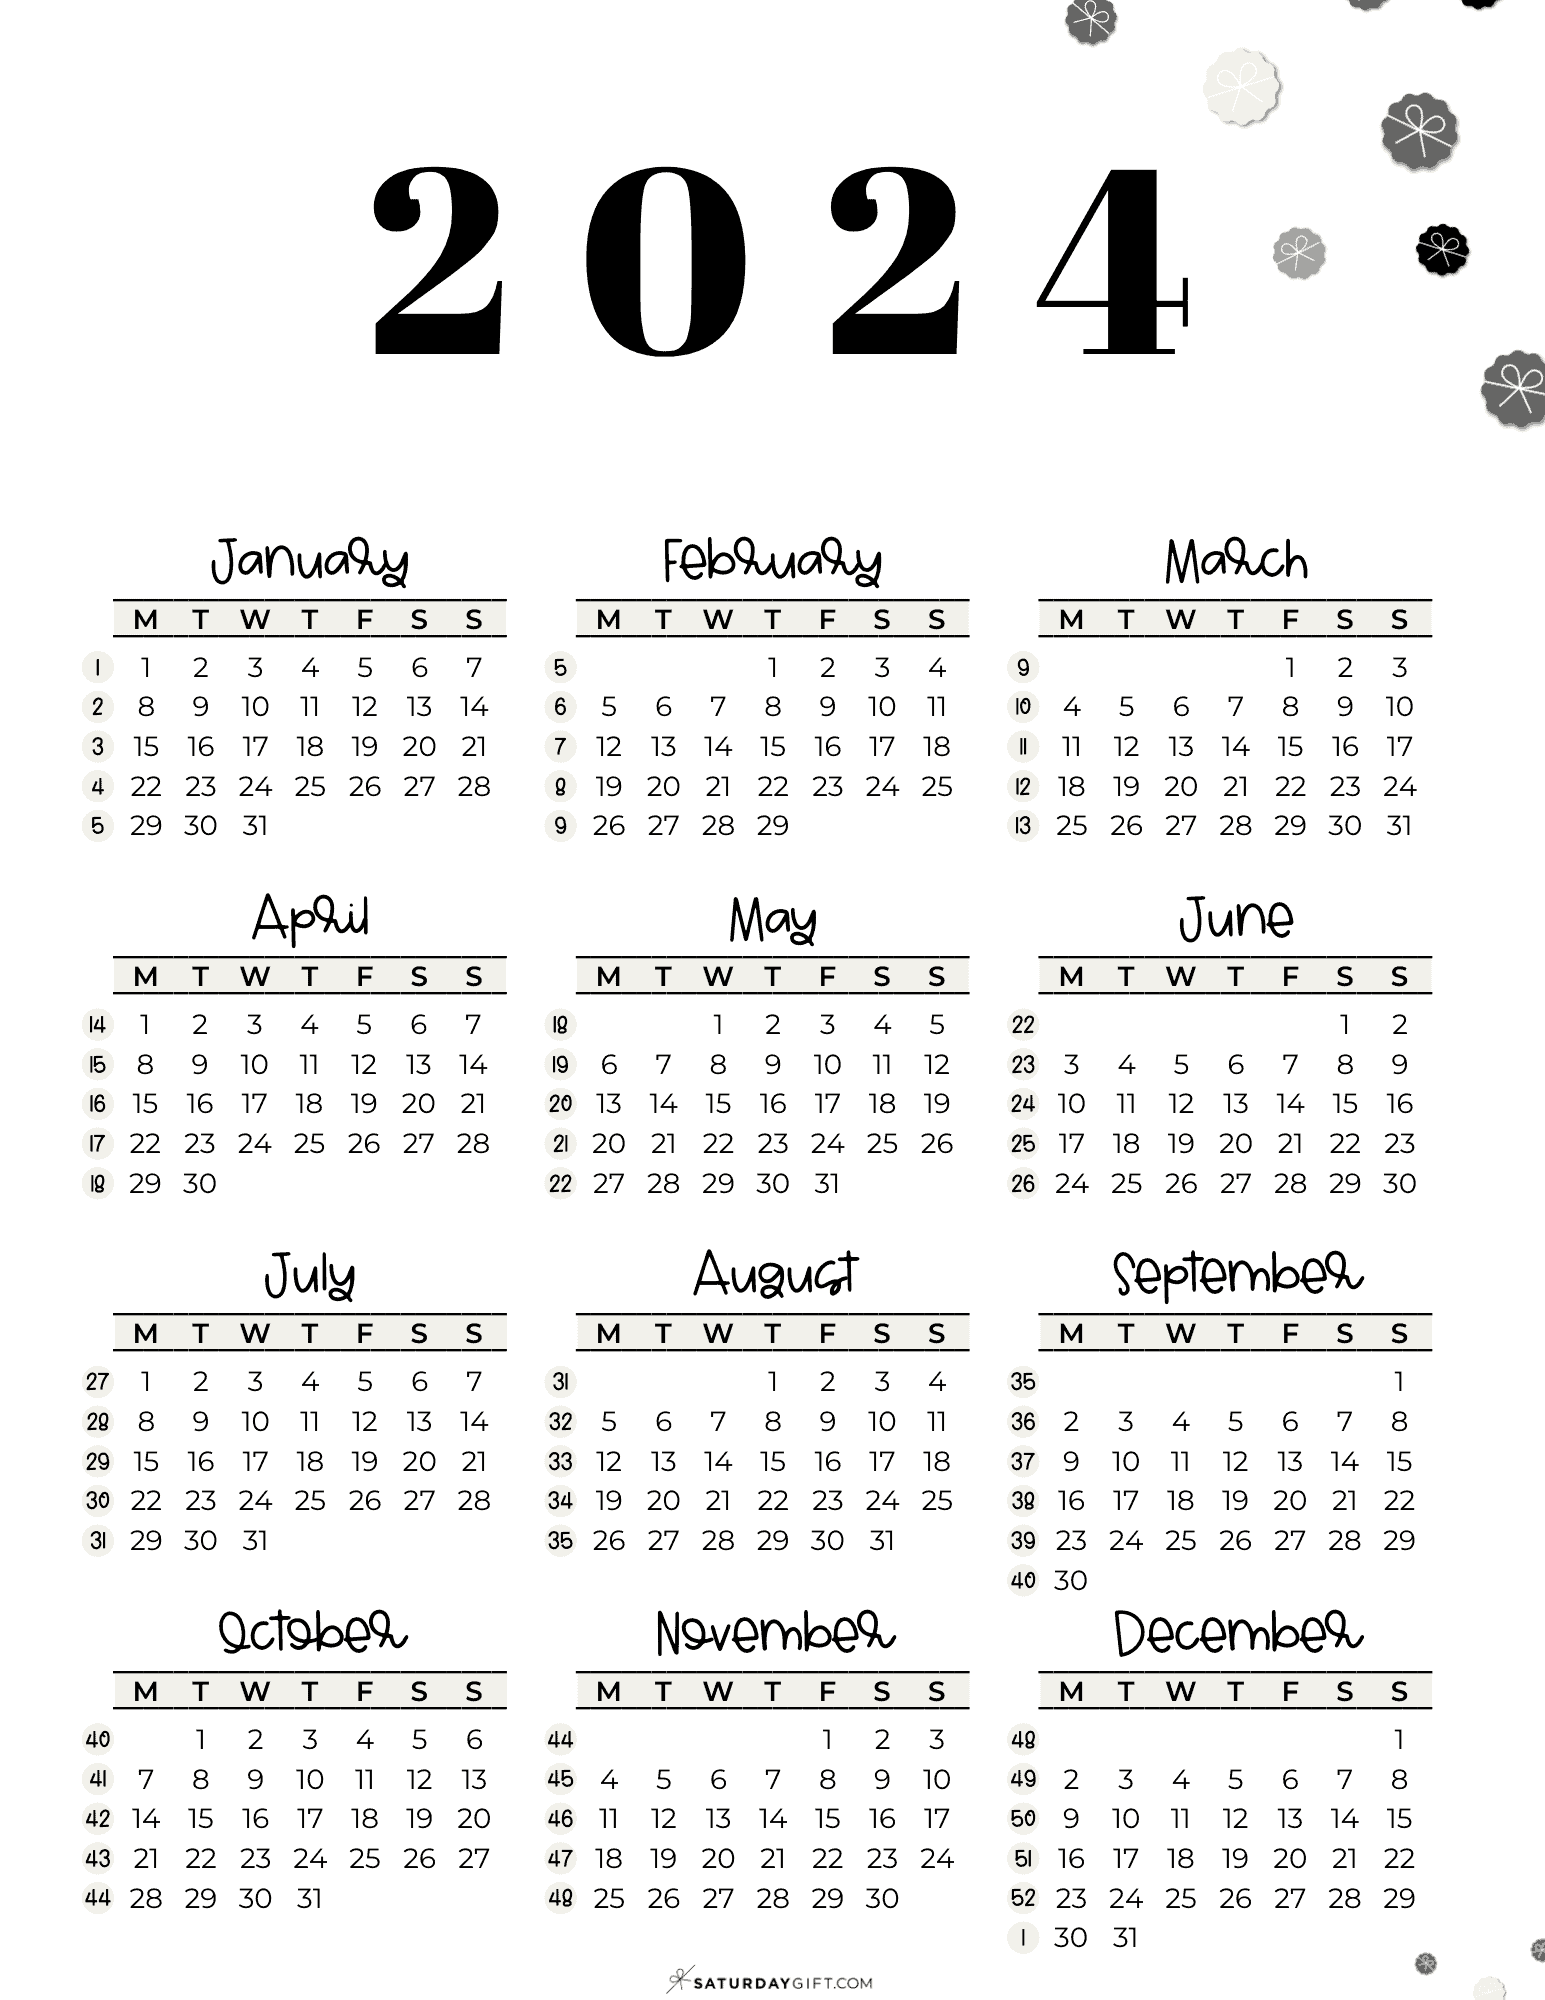 2024 Numbered Weeks Calendar Sari Winnah - Free Printable Calendar 2024 With Numbered Weeks